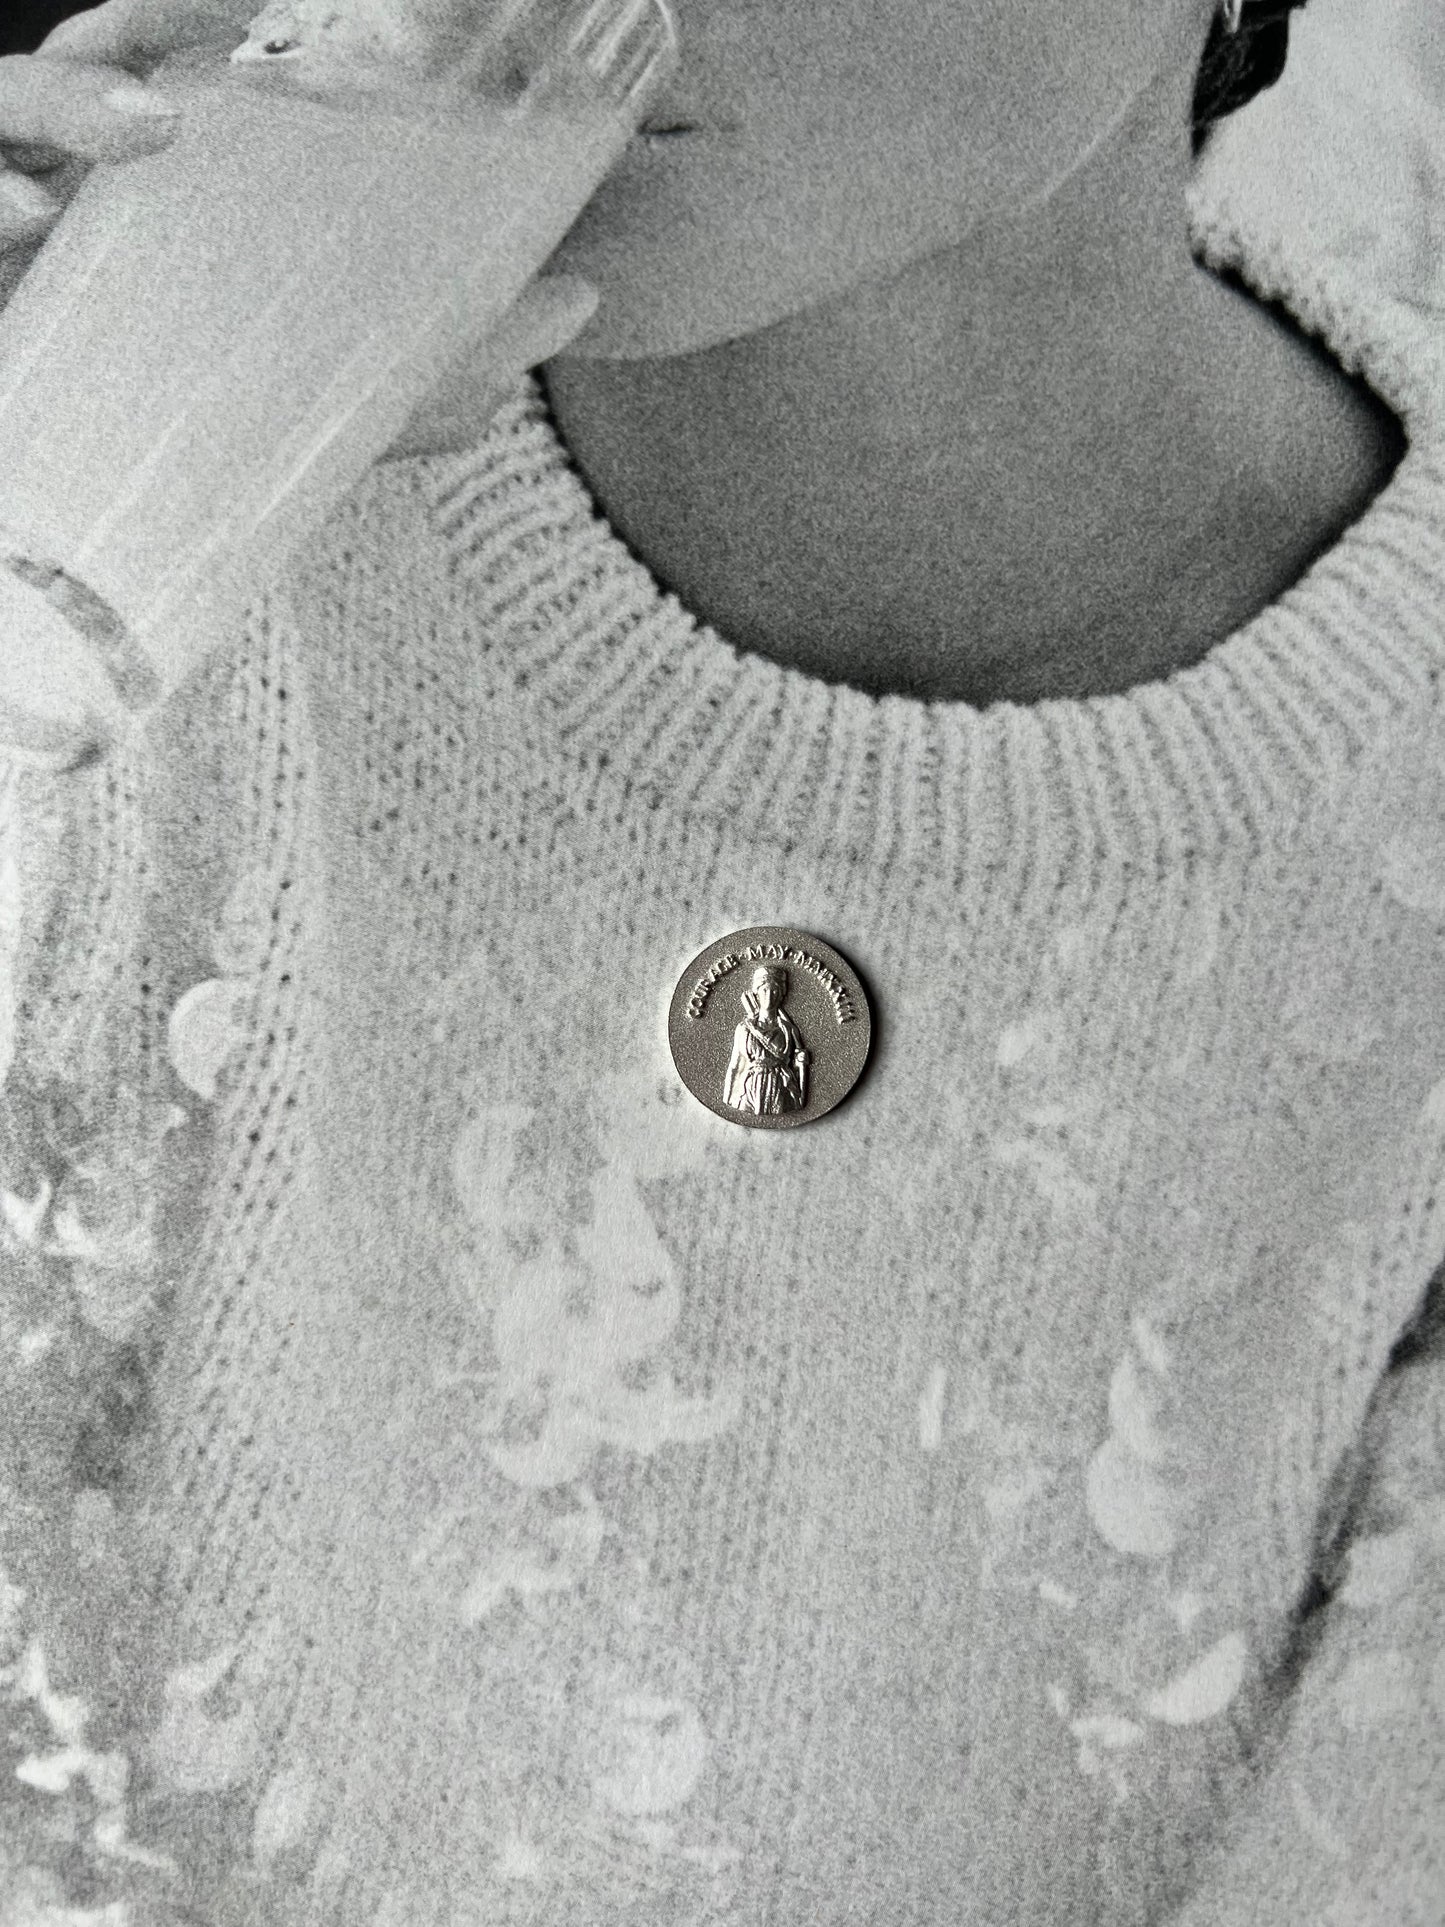 Artemis antique coin silver